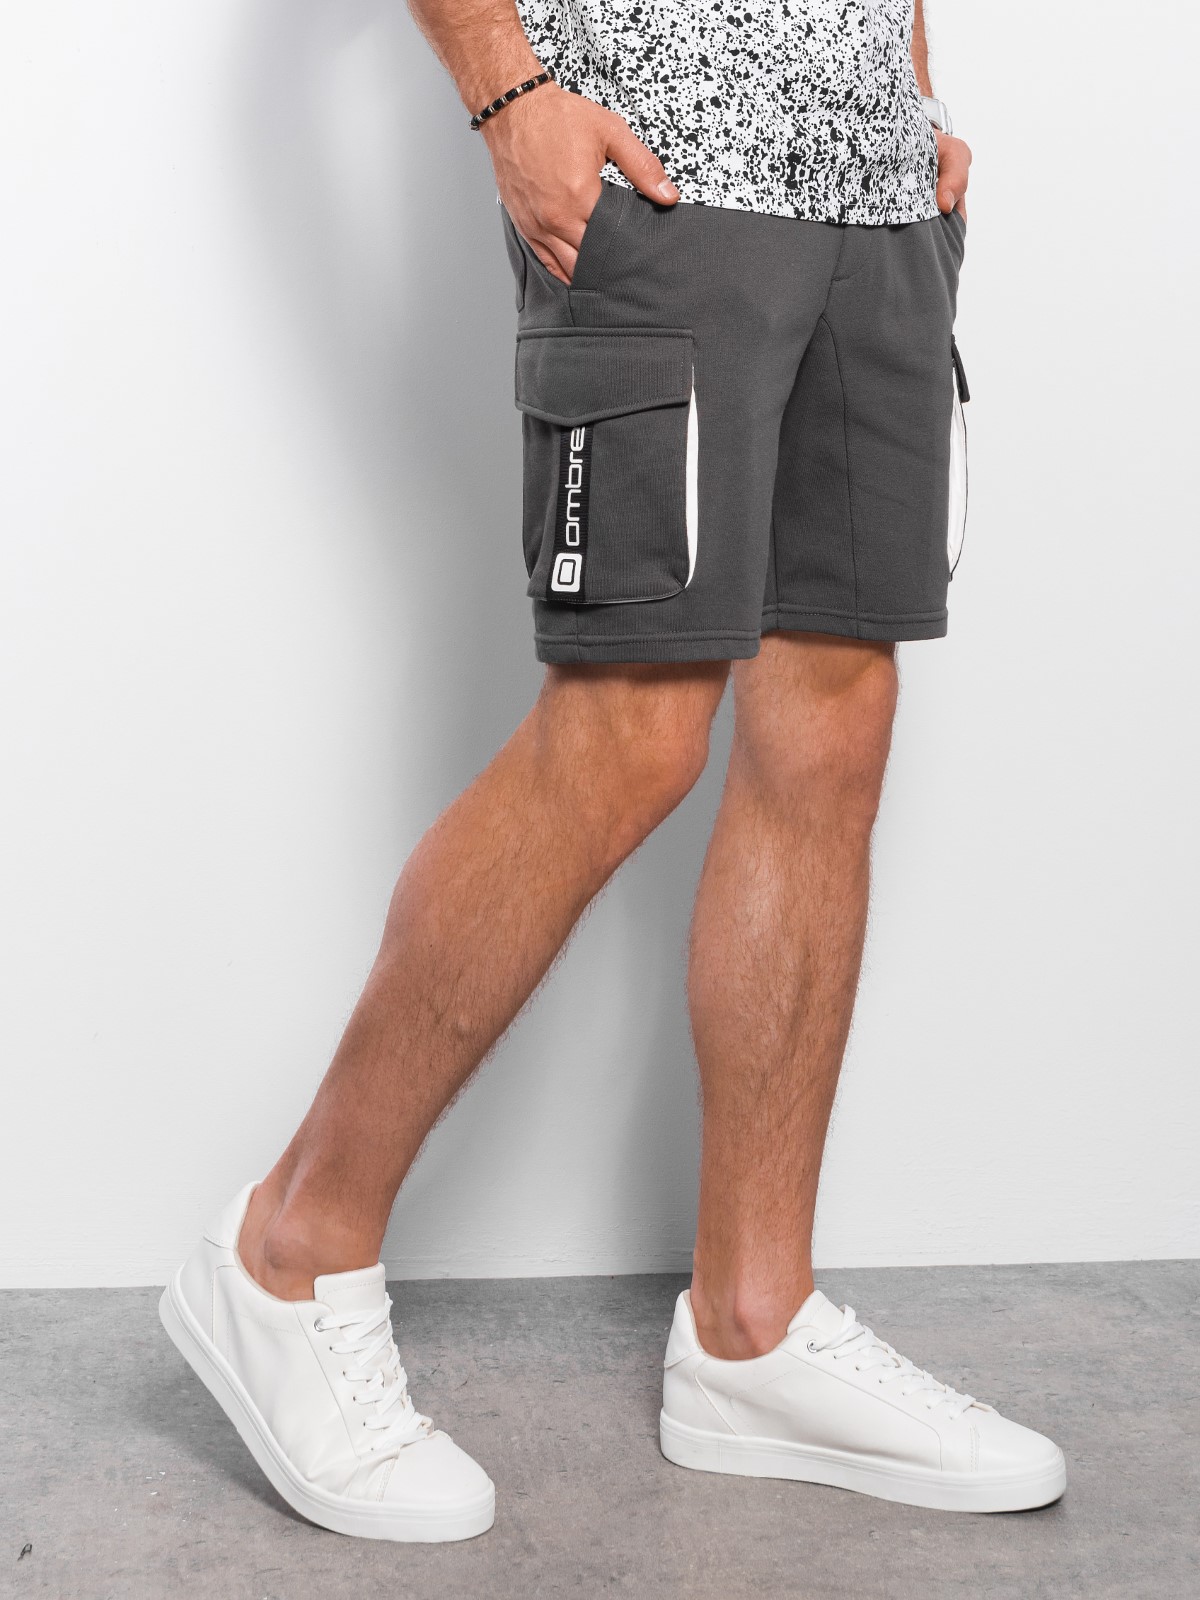 Ombre Men's shorts with cargo pockets - dark grey